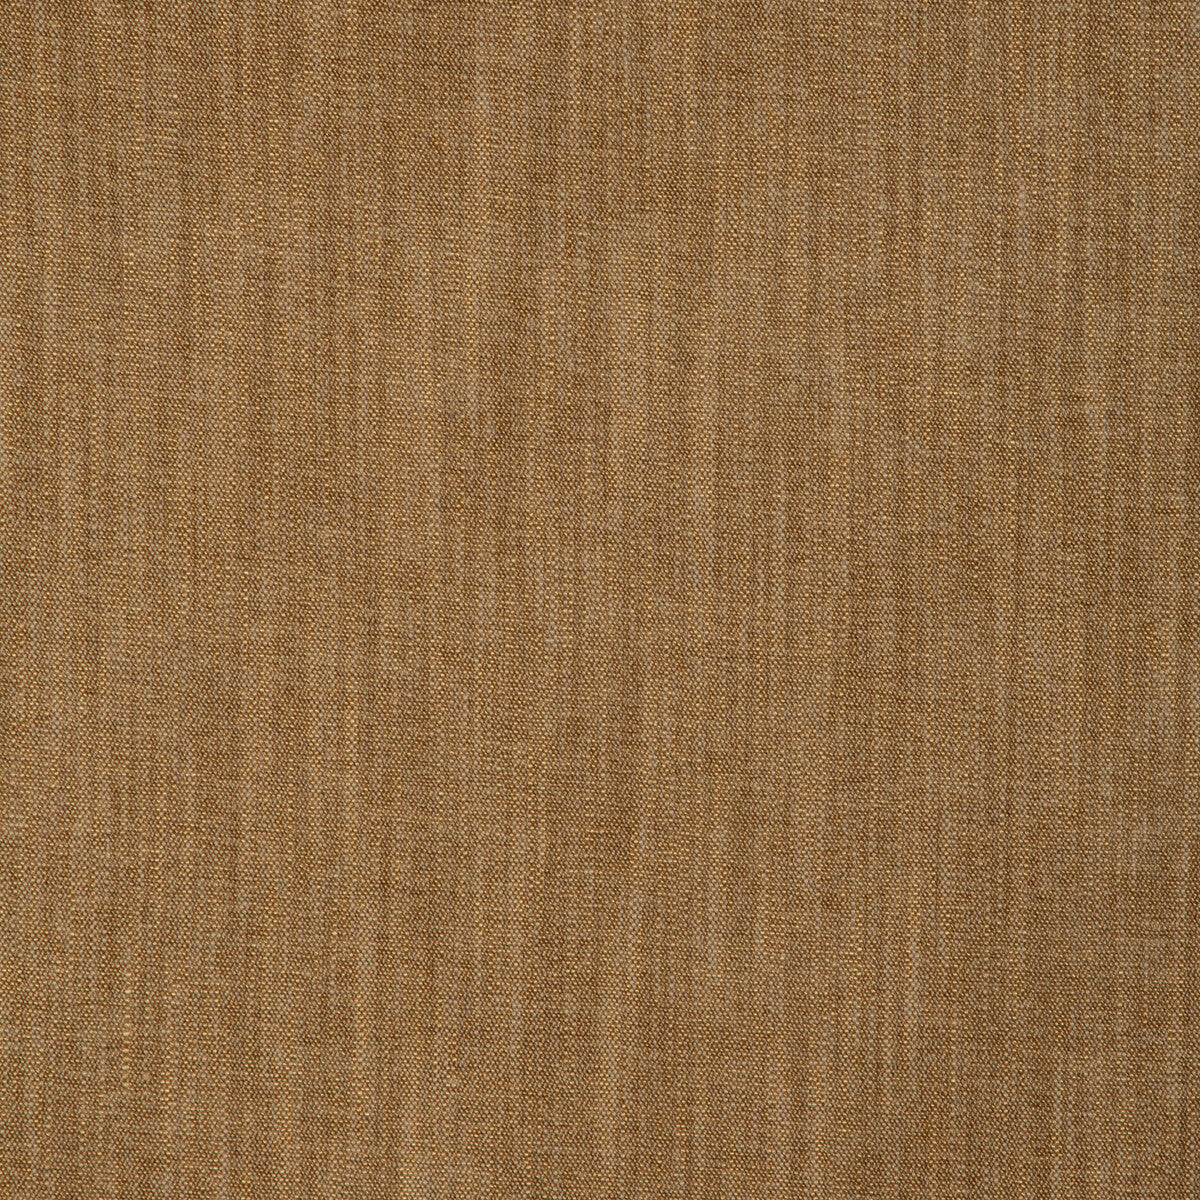 Kravet Smart fabric in 36998-404 color - pattern 36998.404.0 - by Kravet Smart